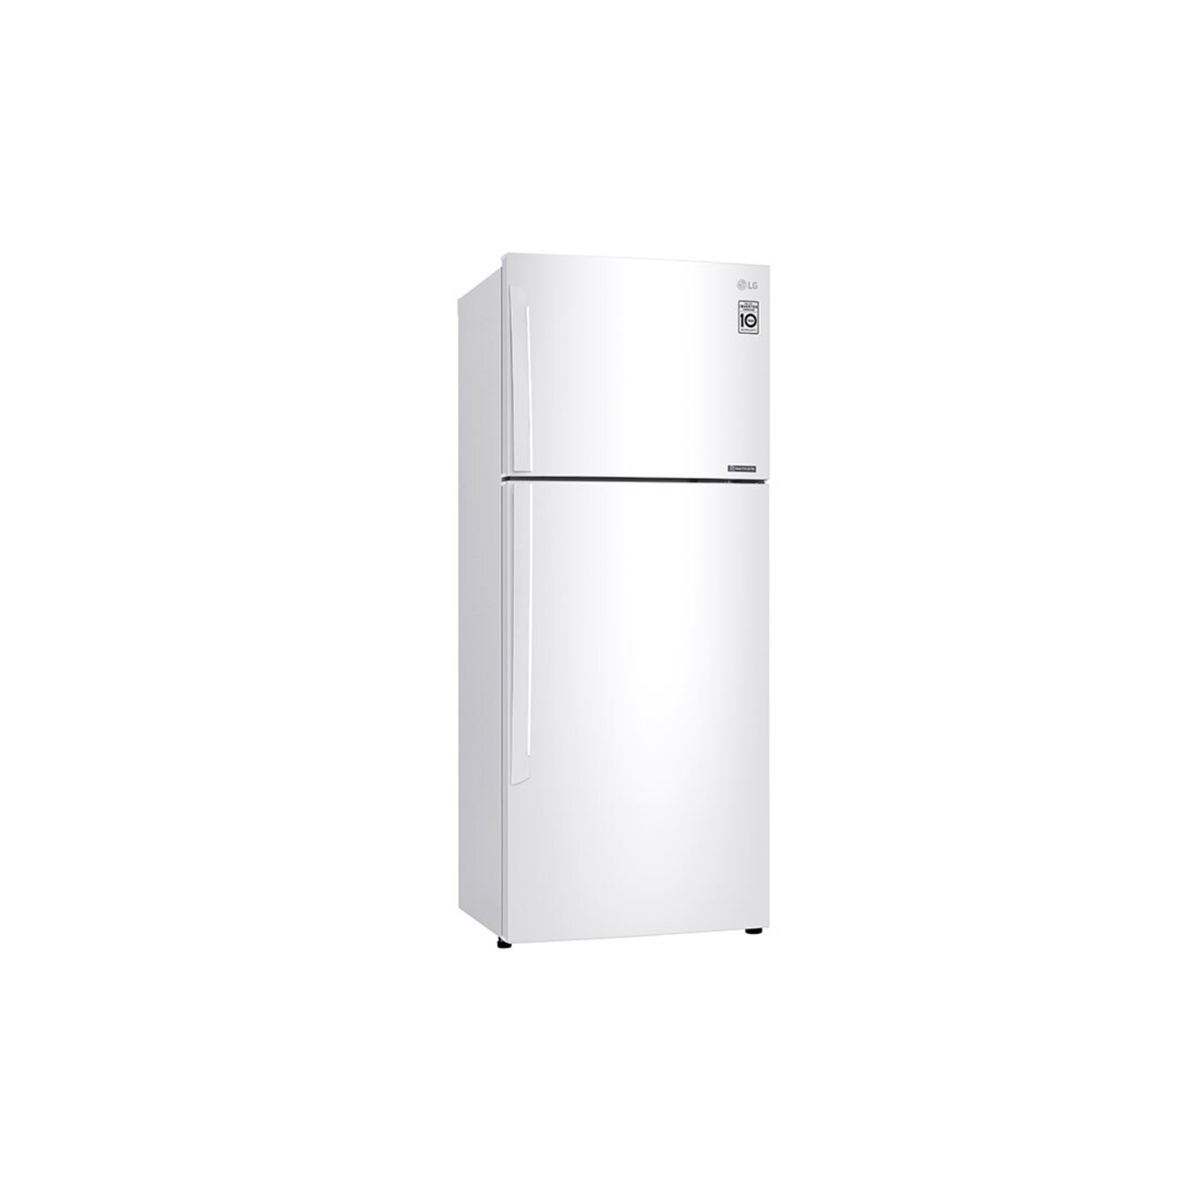 LG Double Door Refrigerator with Smart Inverter Compressor, 438 L, Super White, GR-C629HQCL